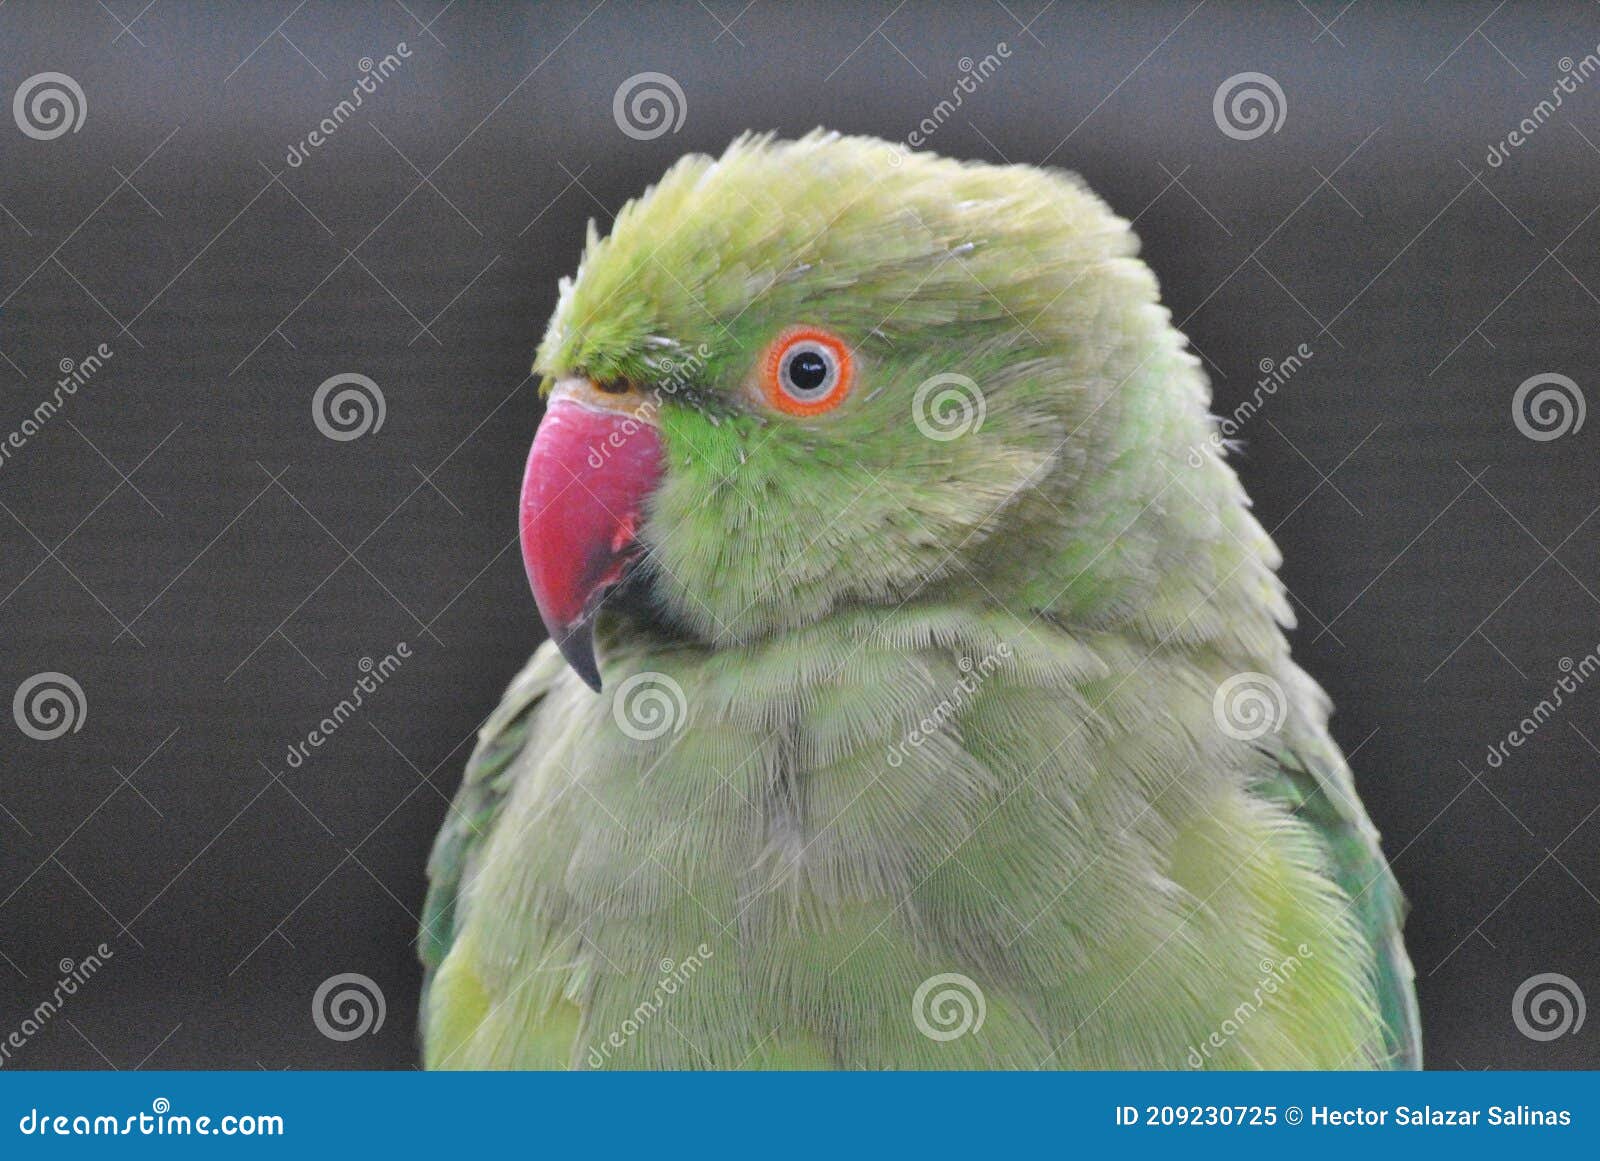 green bird eyes wildlife inteligencia